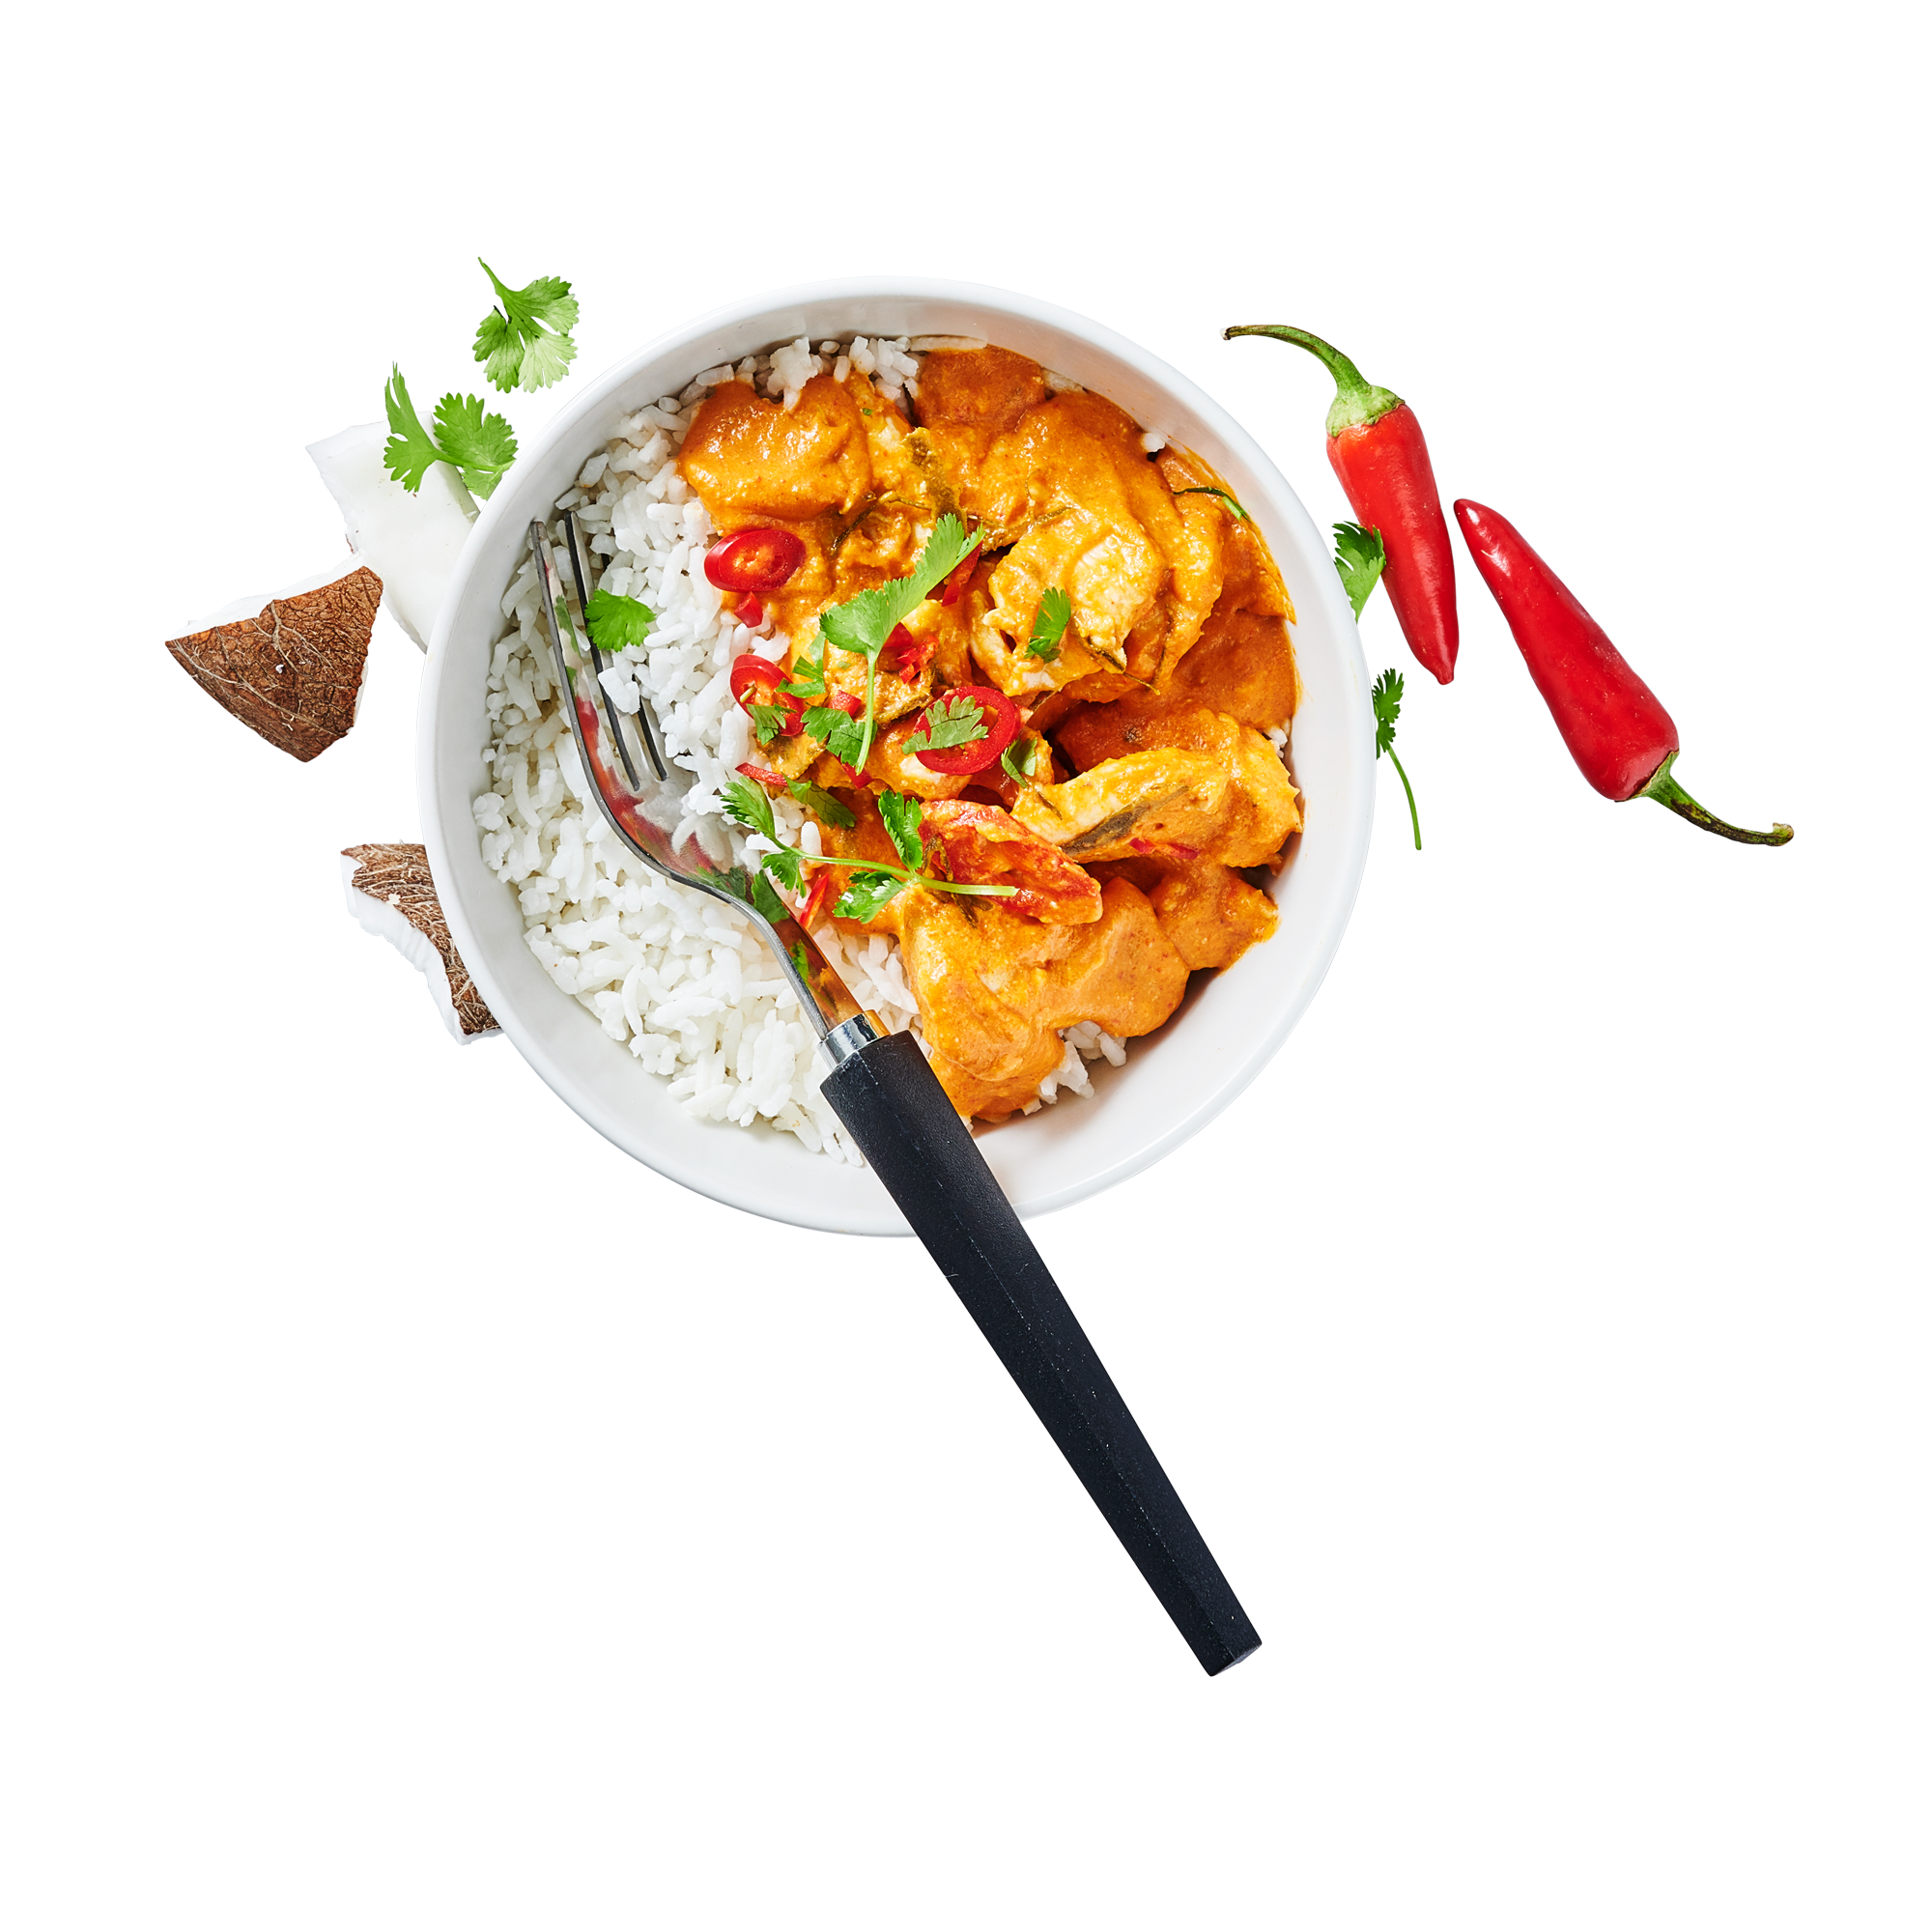 https://kitchen-joy.eu/wp-content/uploads/2020/12/Panang-curry-chicken_1x1.png